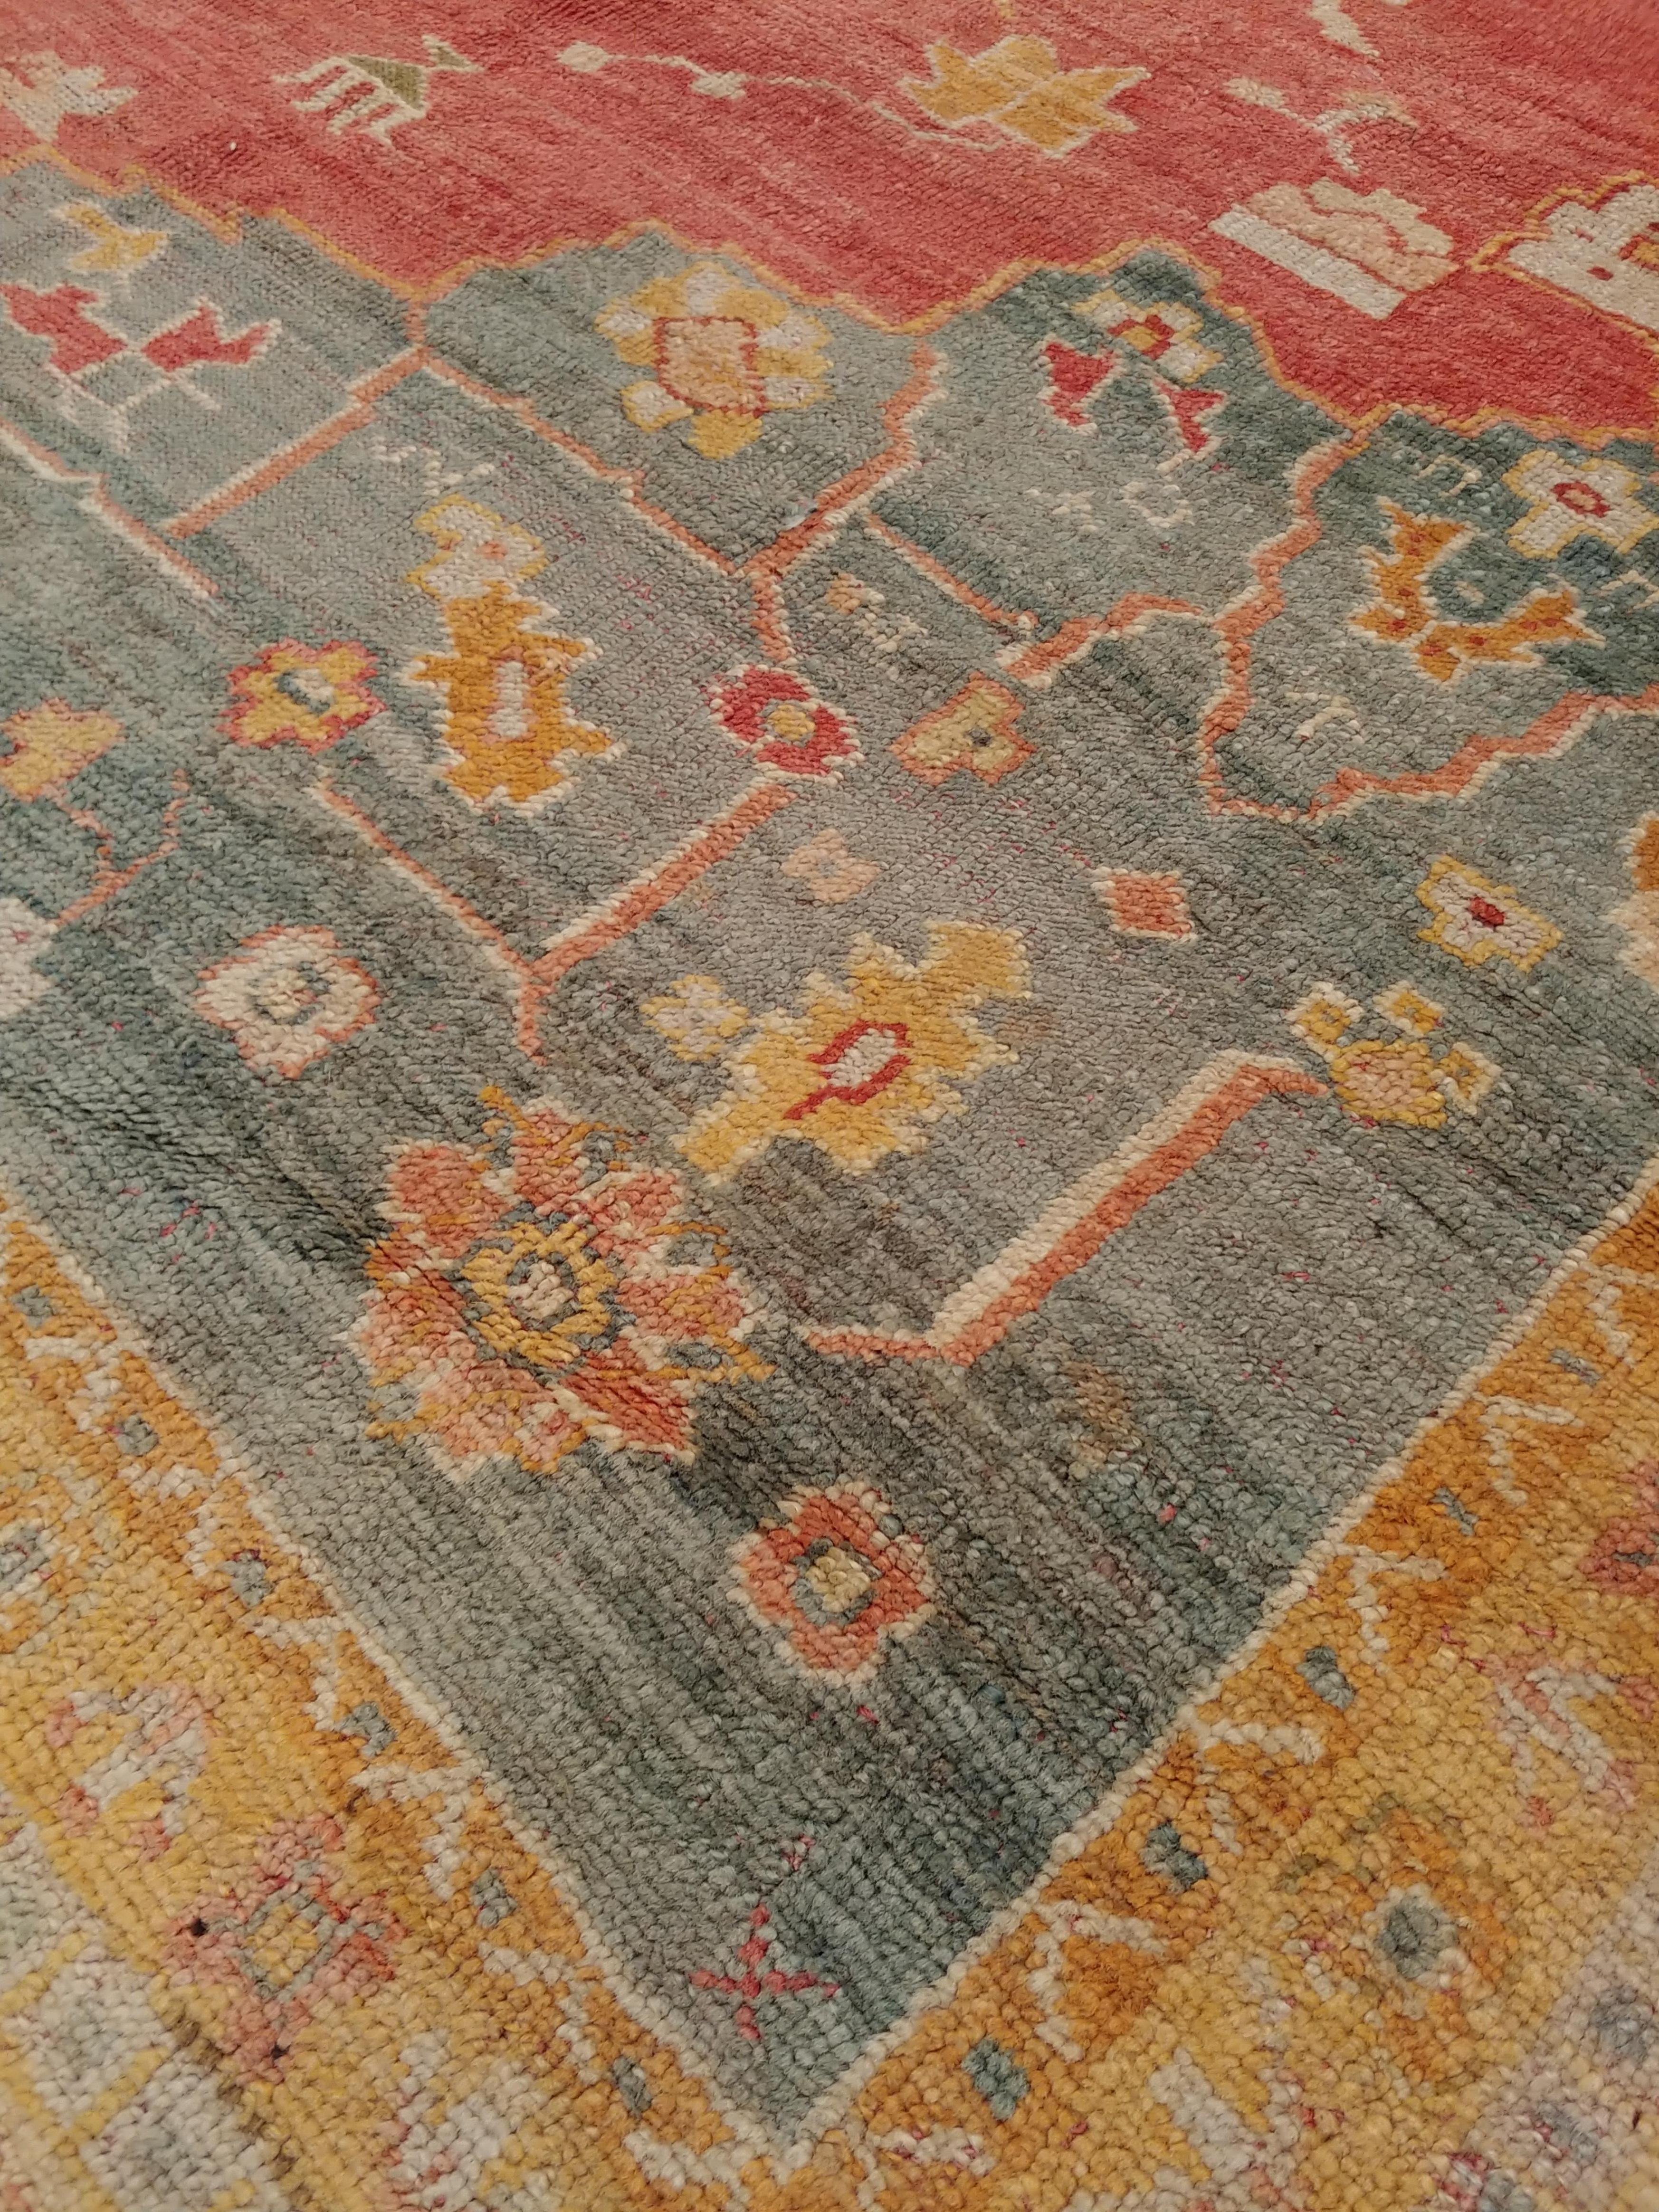 19th Century Antique Oushak Carpet, Handmade Turkish Oriental Rug, Beige, Coral, Light Blue For Sale